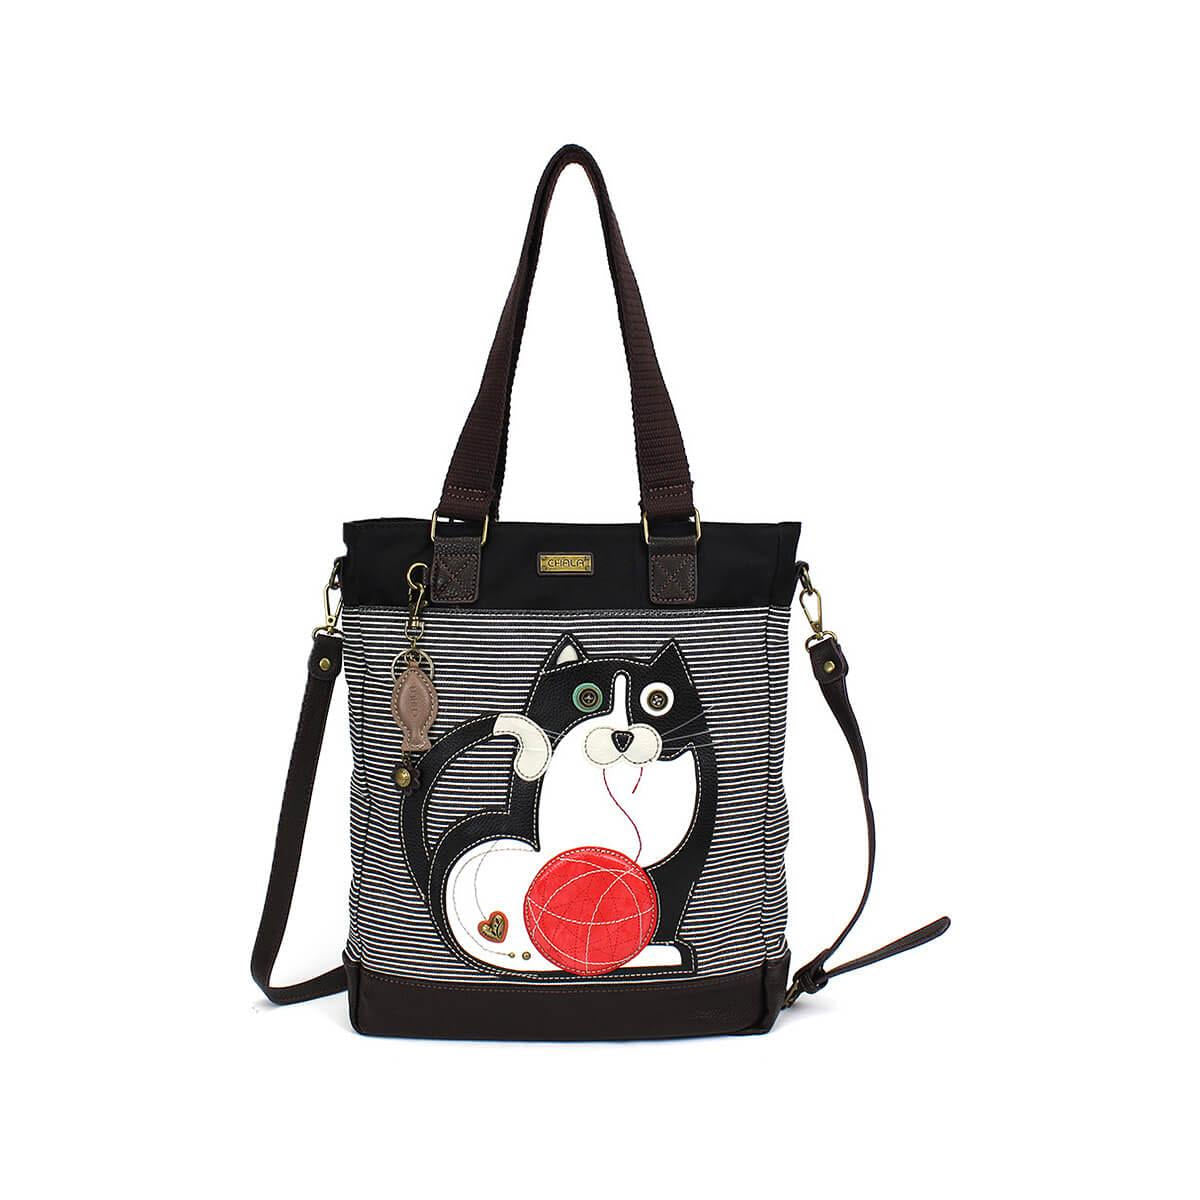 Striped crossbody bag with CHALA TOTE CAT BLACK STRIPE design by Chala.